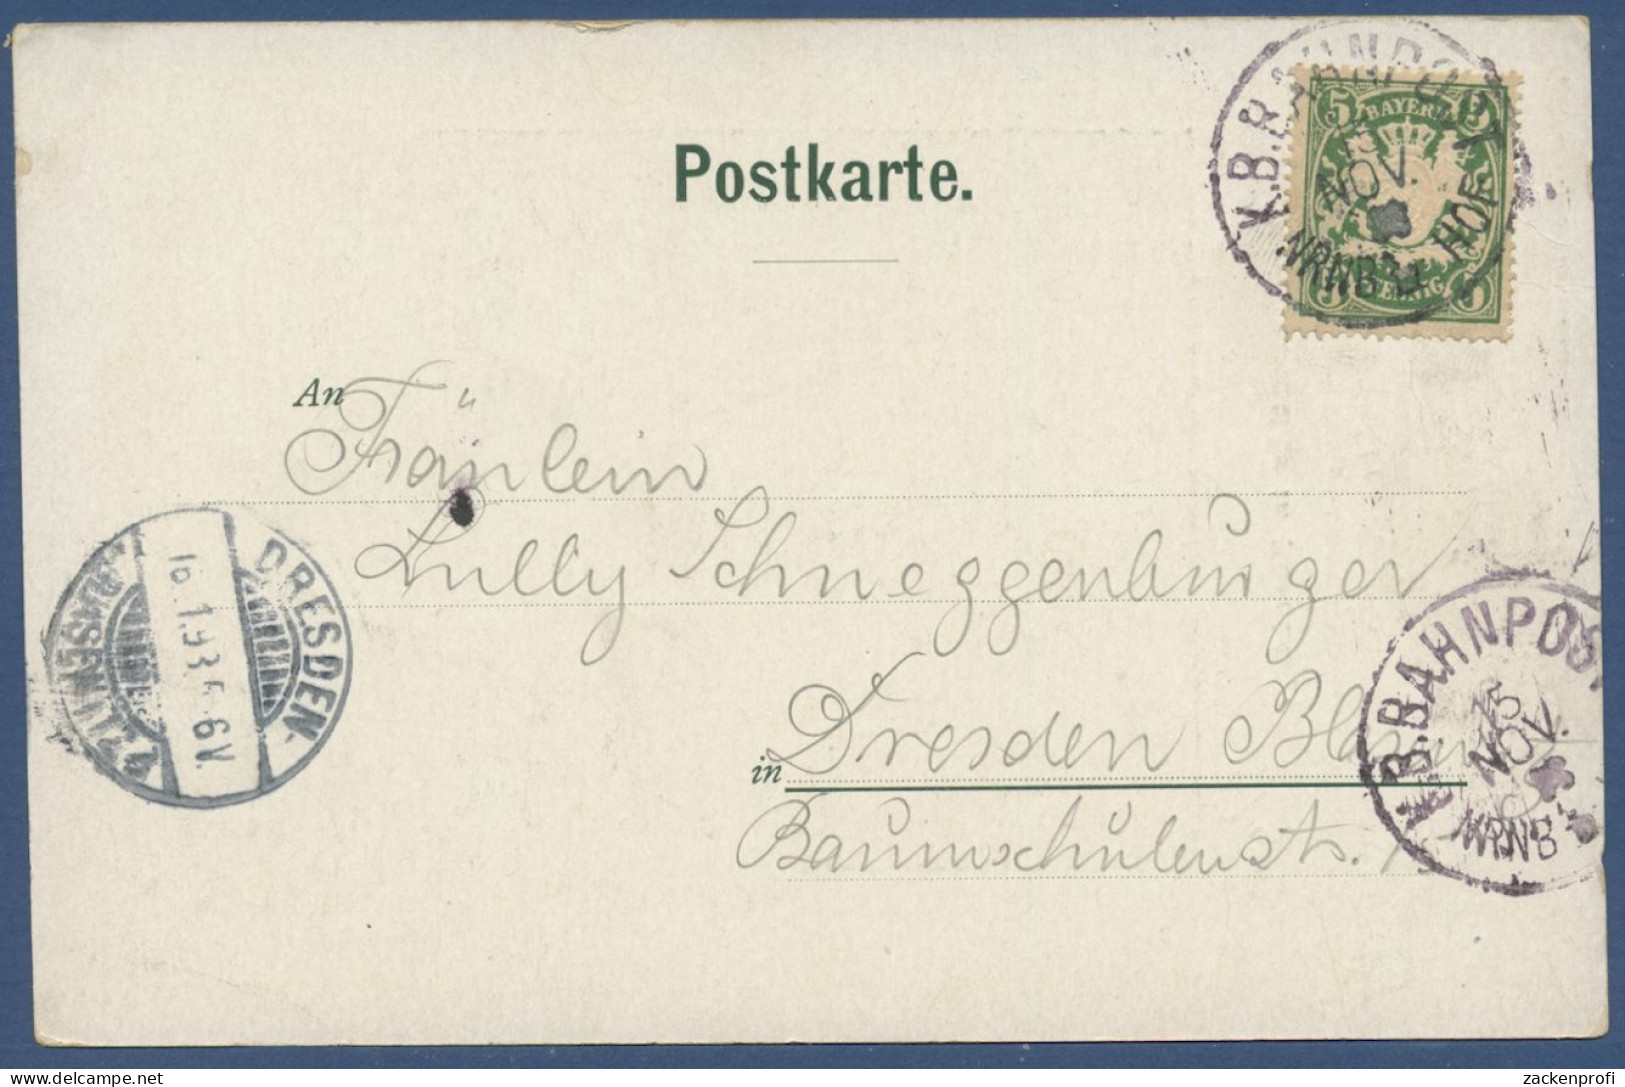 Frauentor In Nürnberg Burg, Gelaufen 1898 Mit Bahnpost (AK1133) - Nürnberg